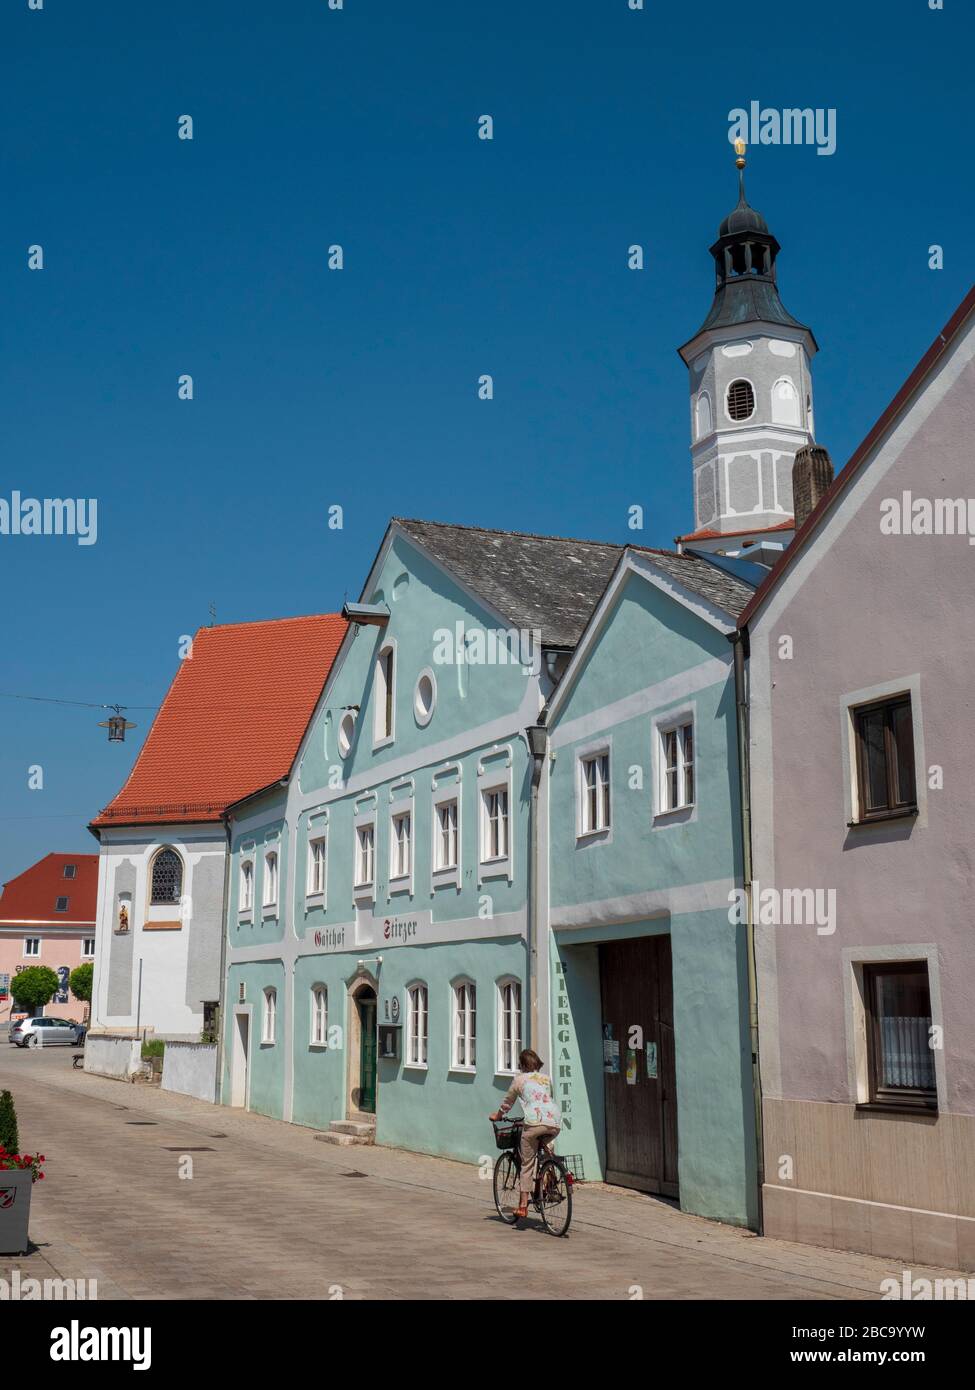 Altstadt Dietfurt an der Altmuehl, Upper Palatinate, Bavaria, Germany Stock Photo